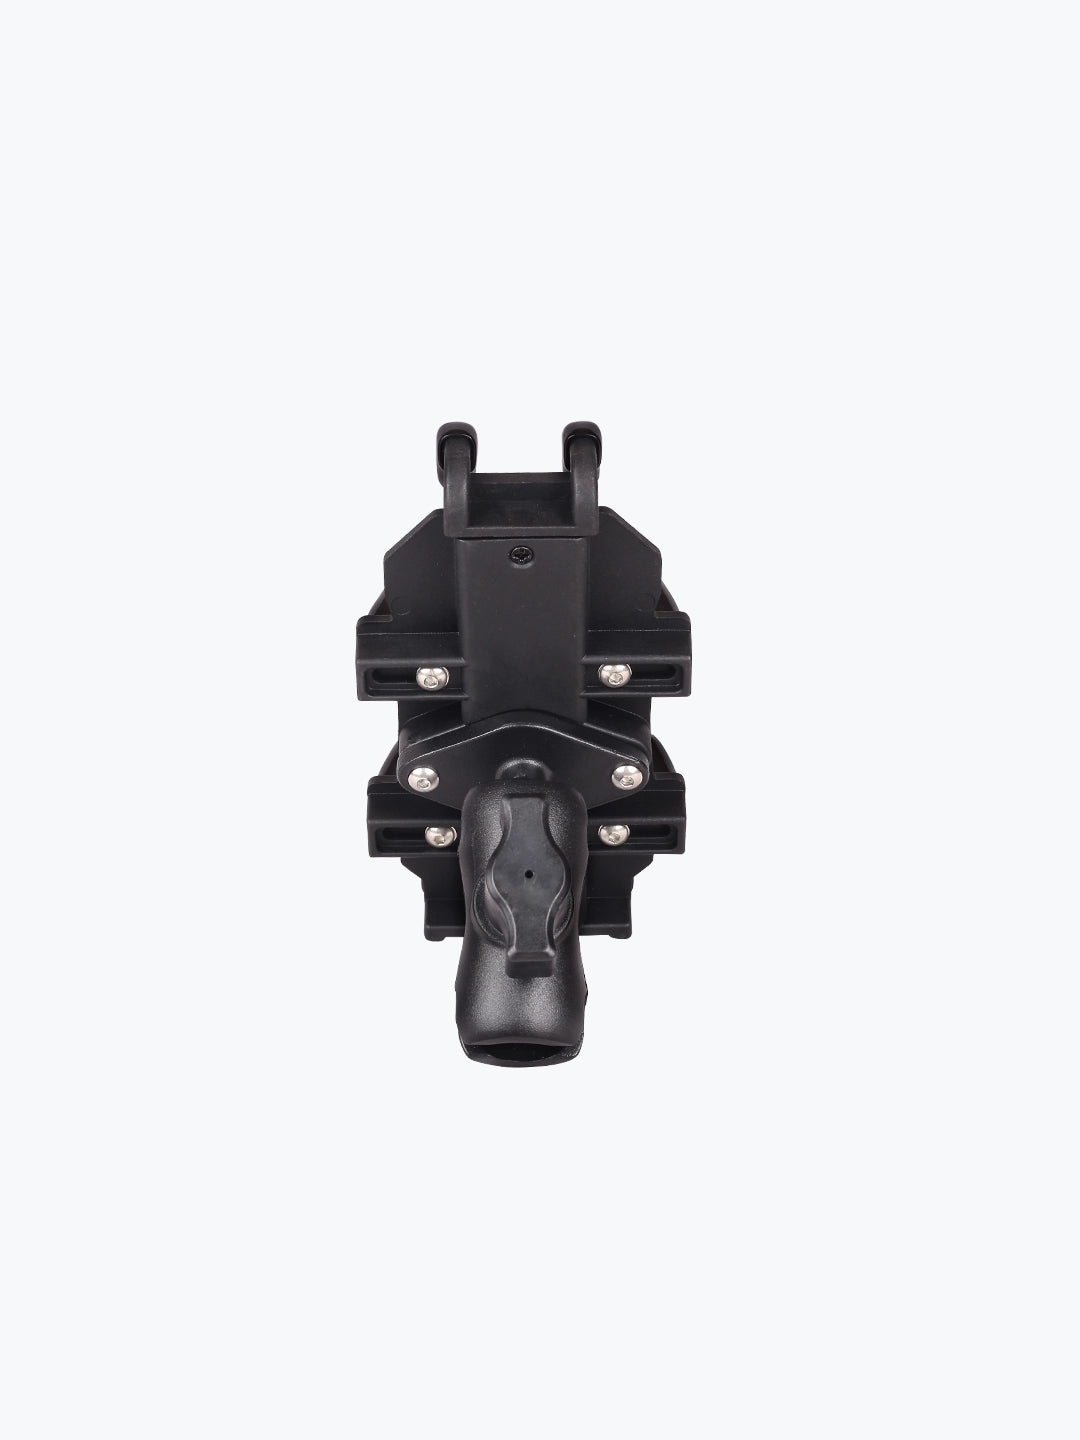 BSDDP RH-F0108 Shockproof Holder Mirror Mount